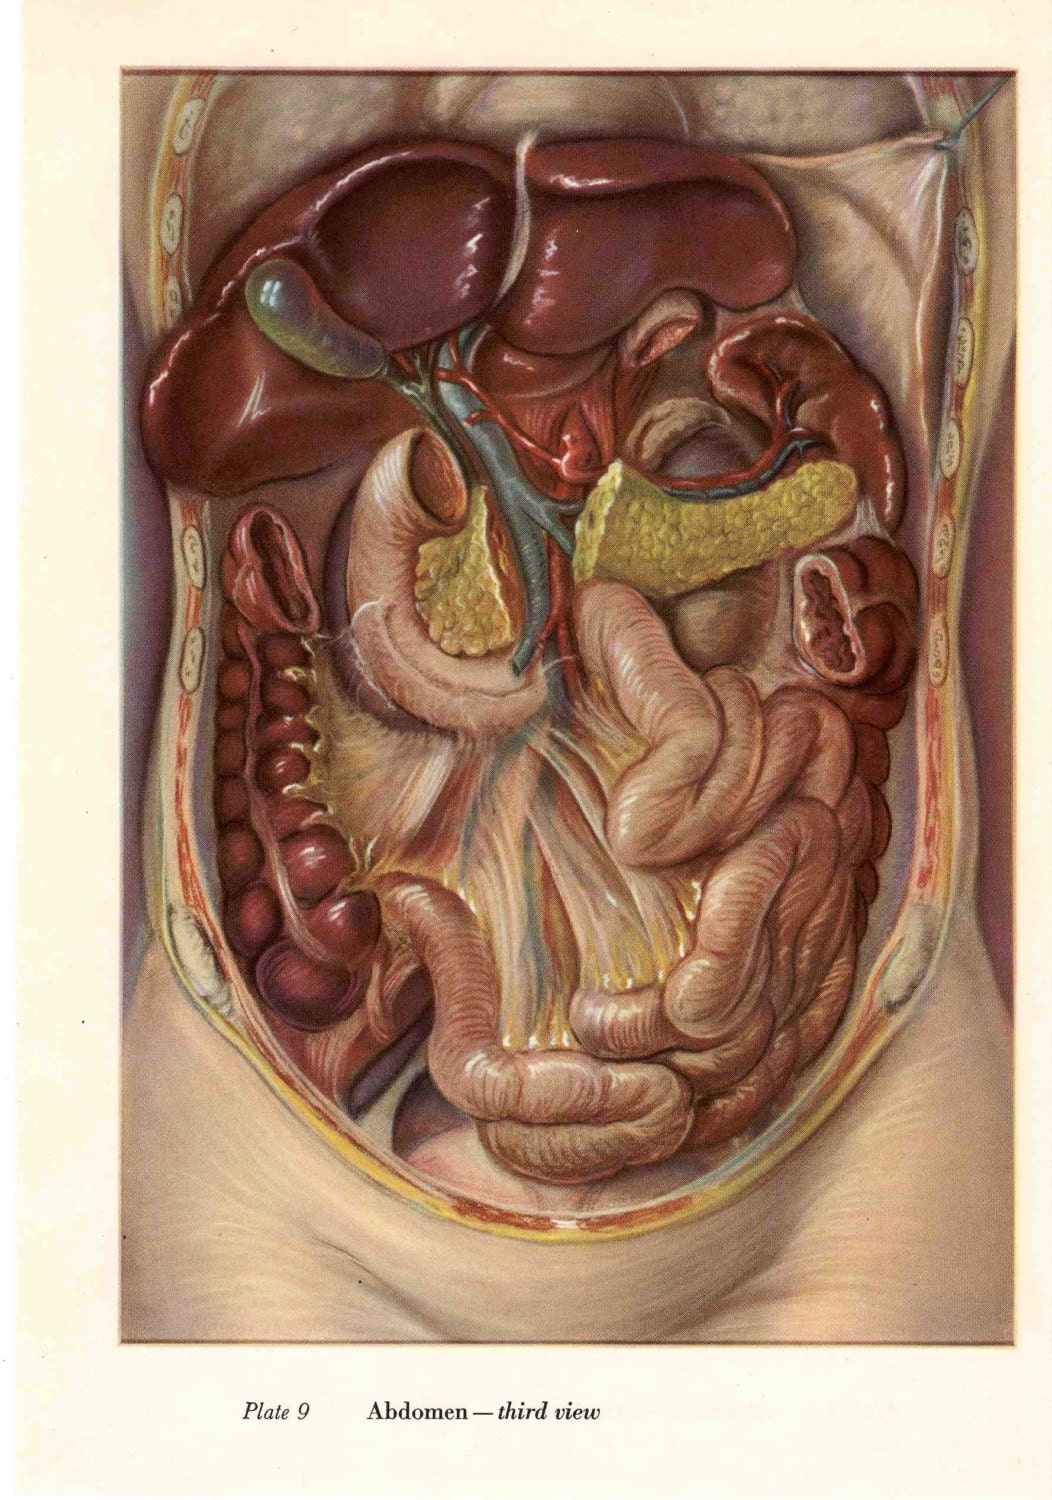 1950 abdomen anatomy original vintage medical print